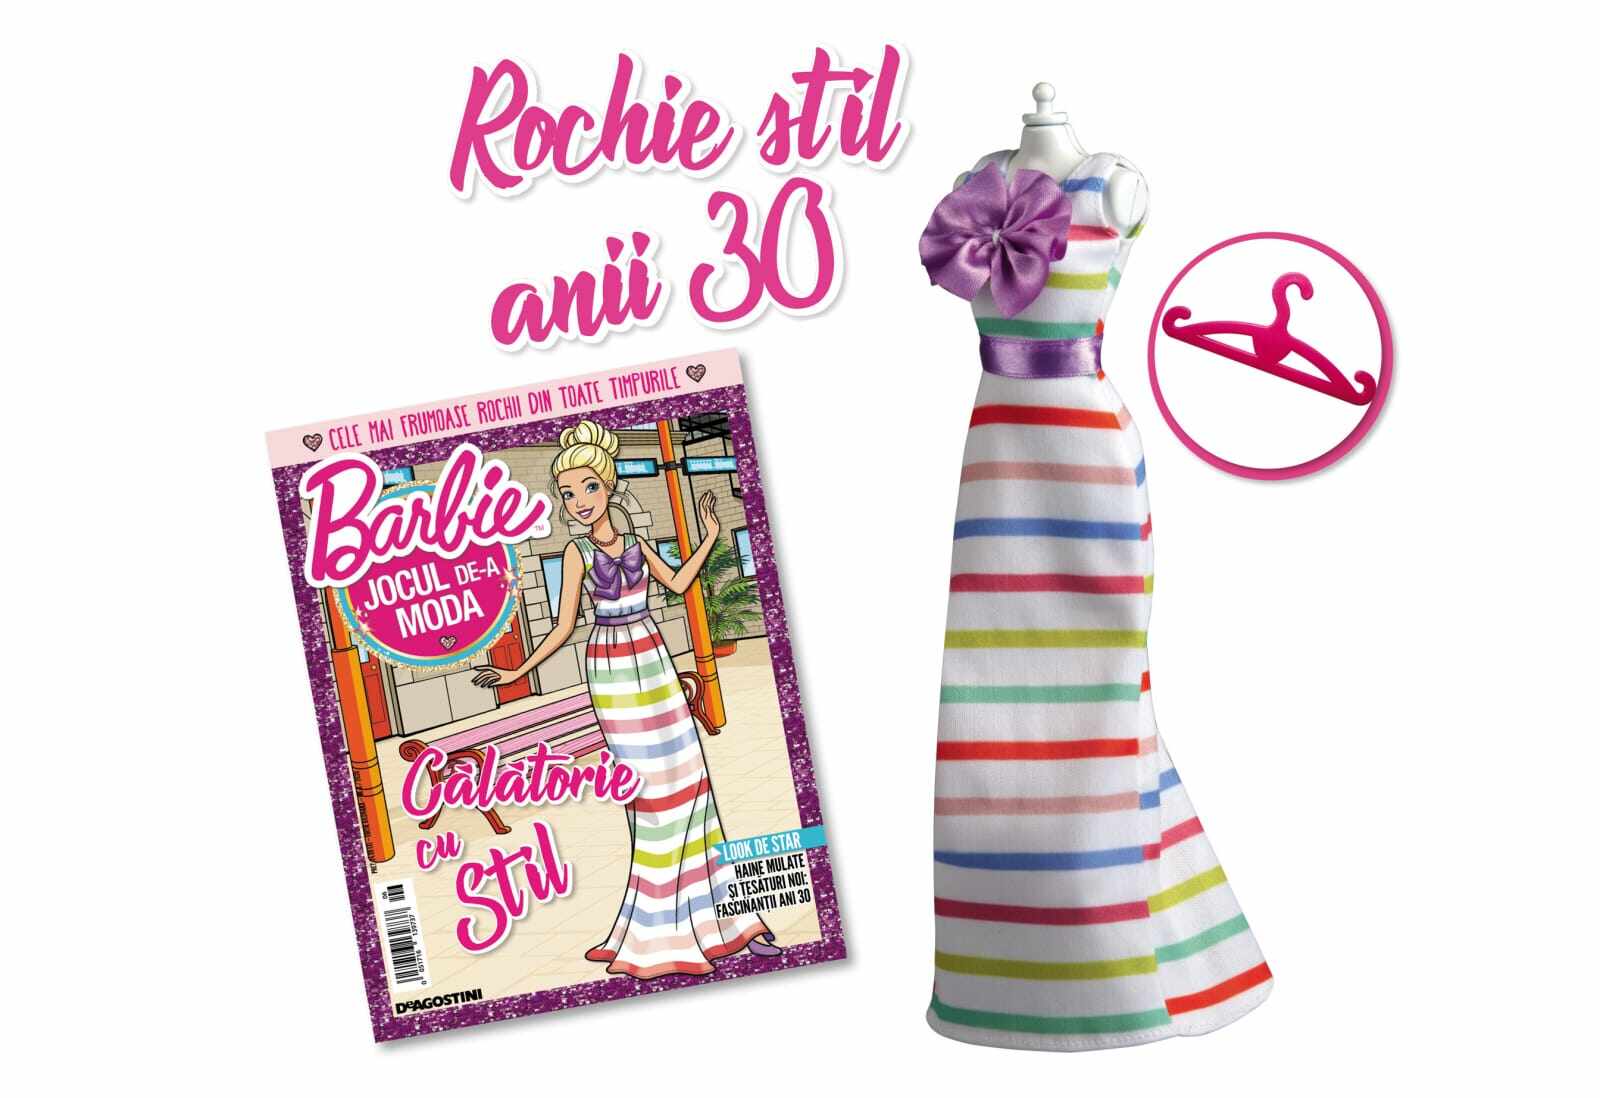 Colectia Barbie Jocul de-a Moda - Nr. 06 - Rochie stil anii 30, DeAgostini, 2-3 ani +